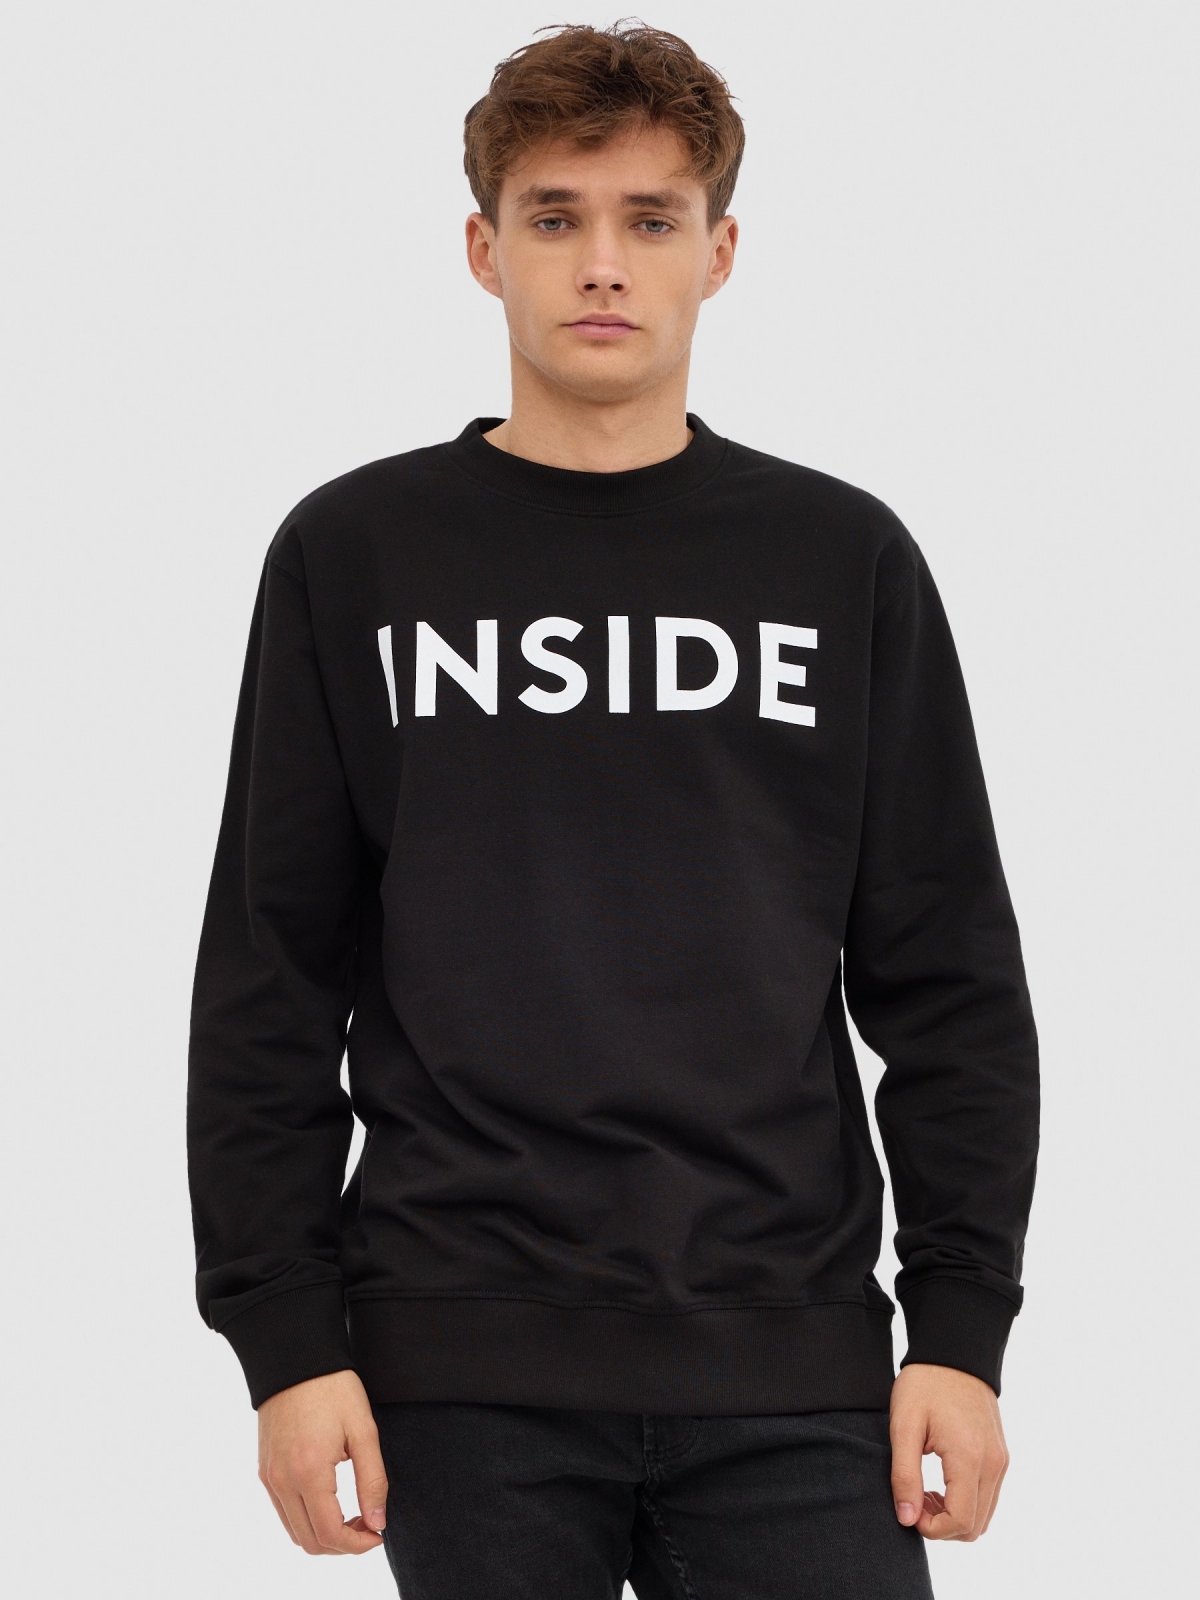 INSIDE hoodless sweatshirt black middle front view